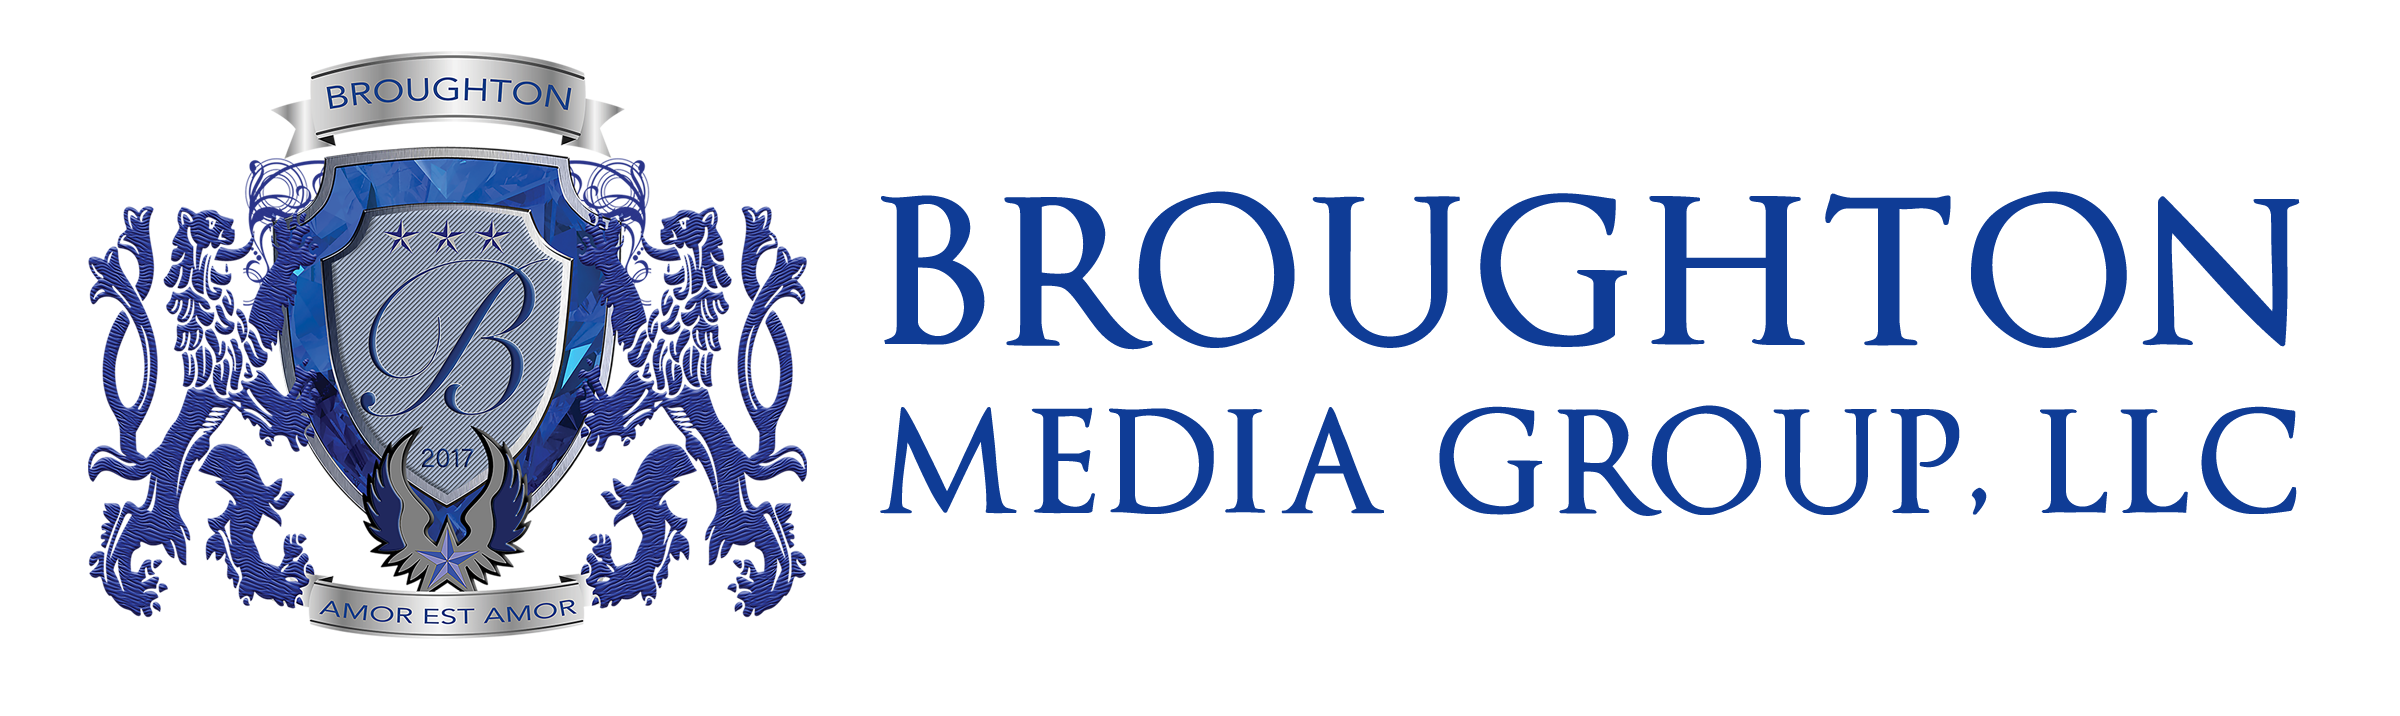 Broughton Media Group, LLC.